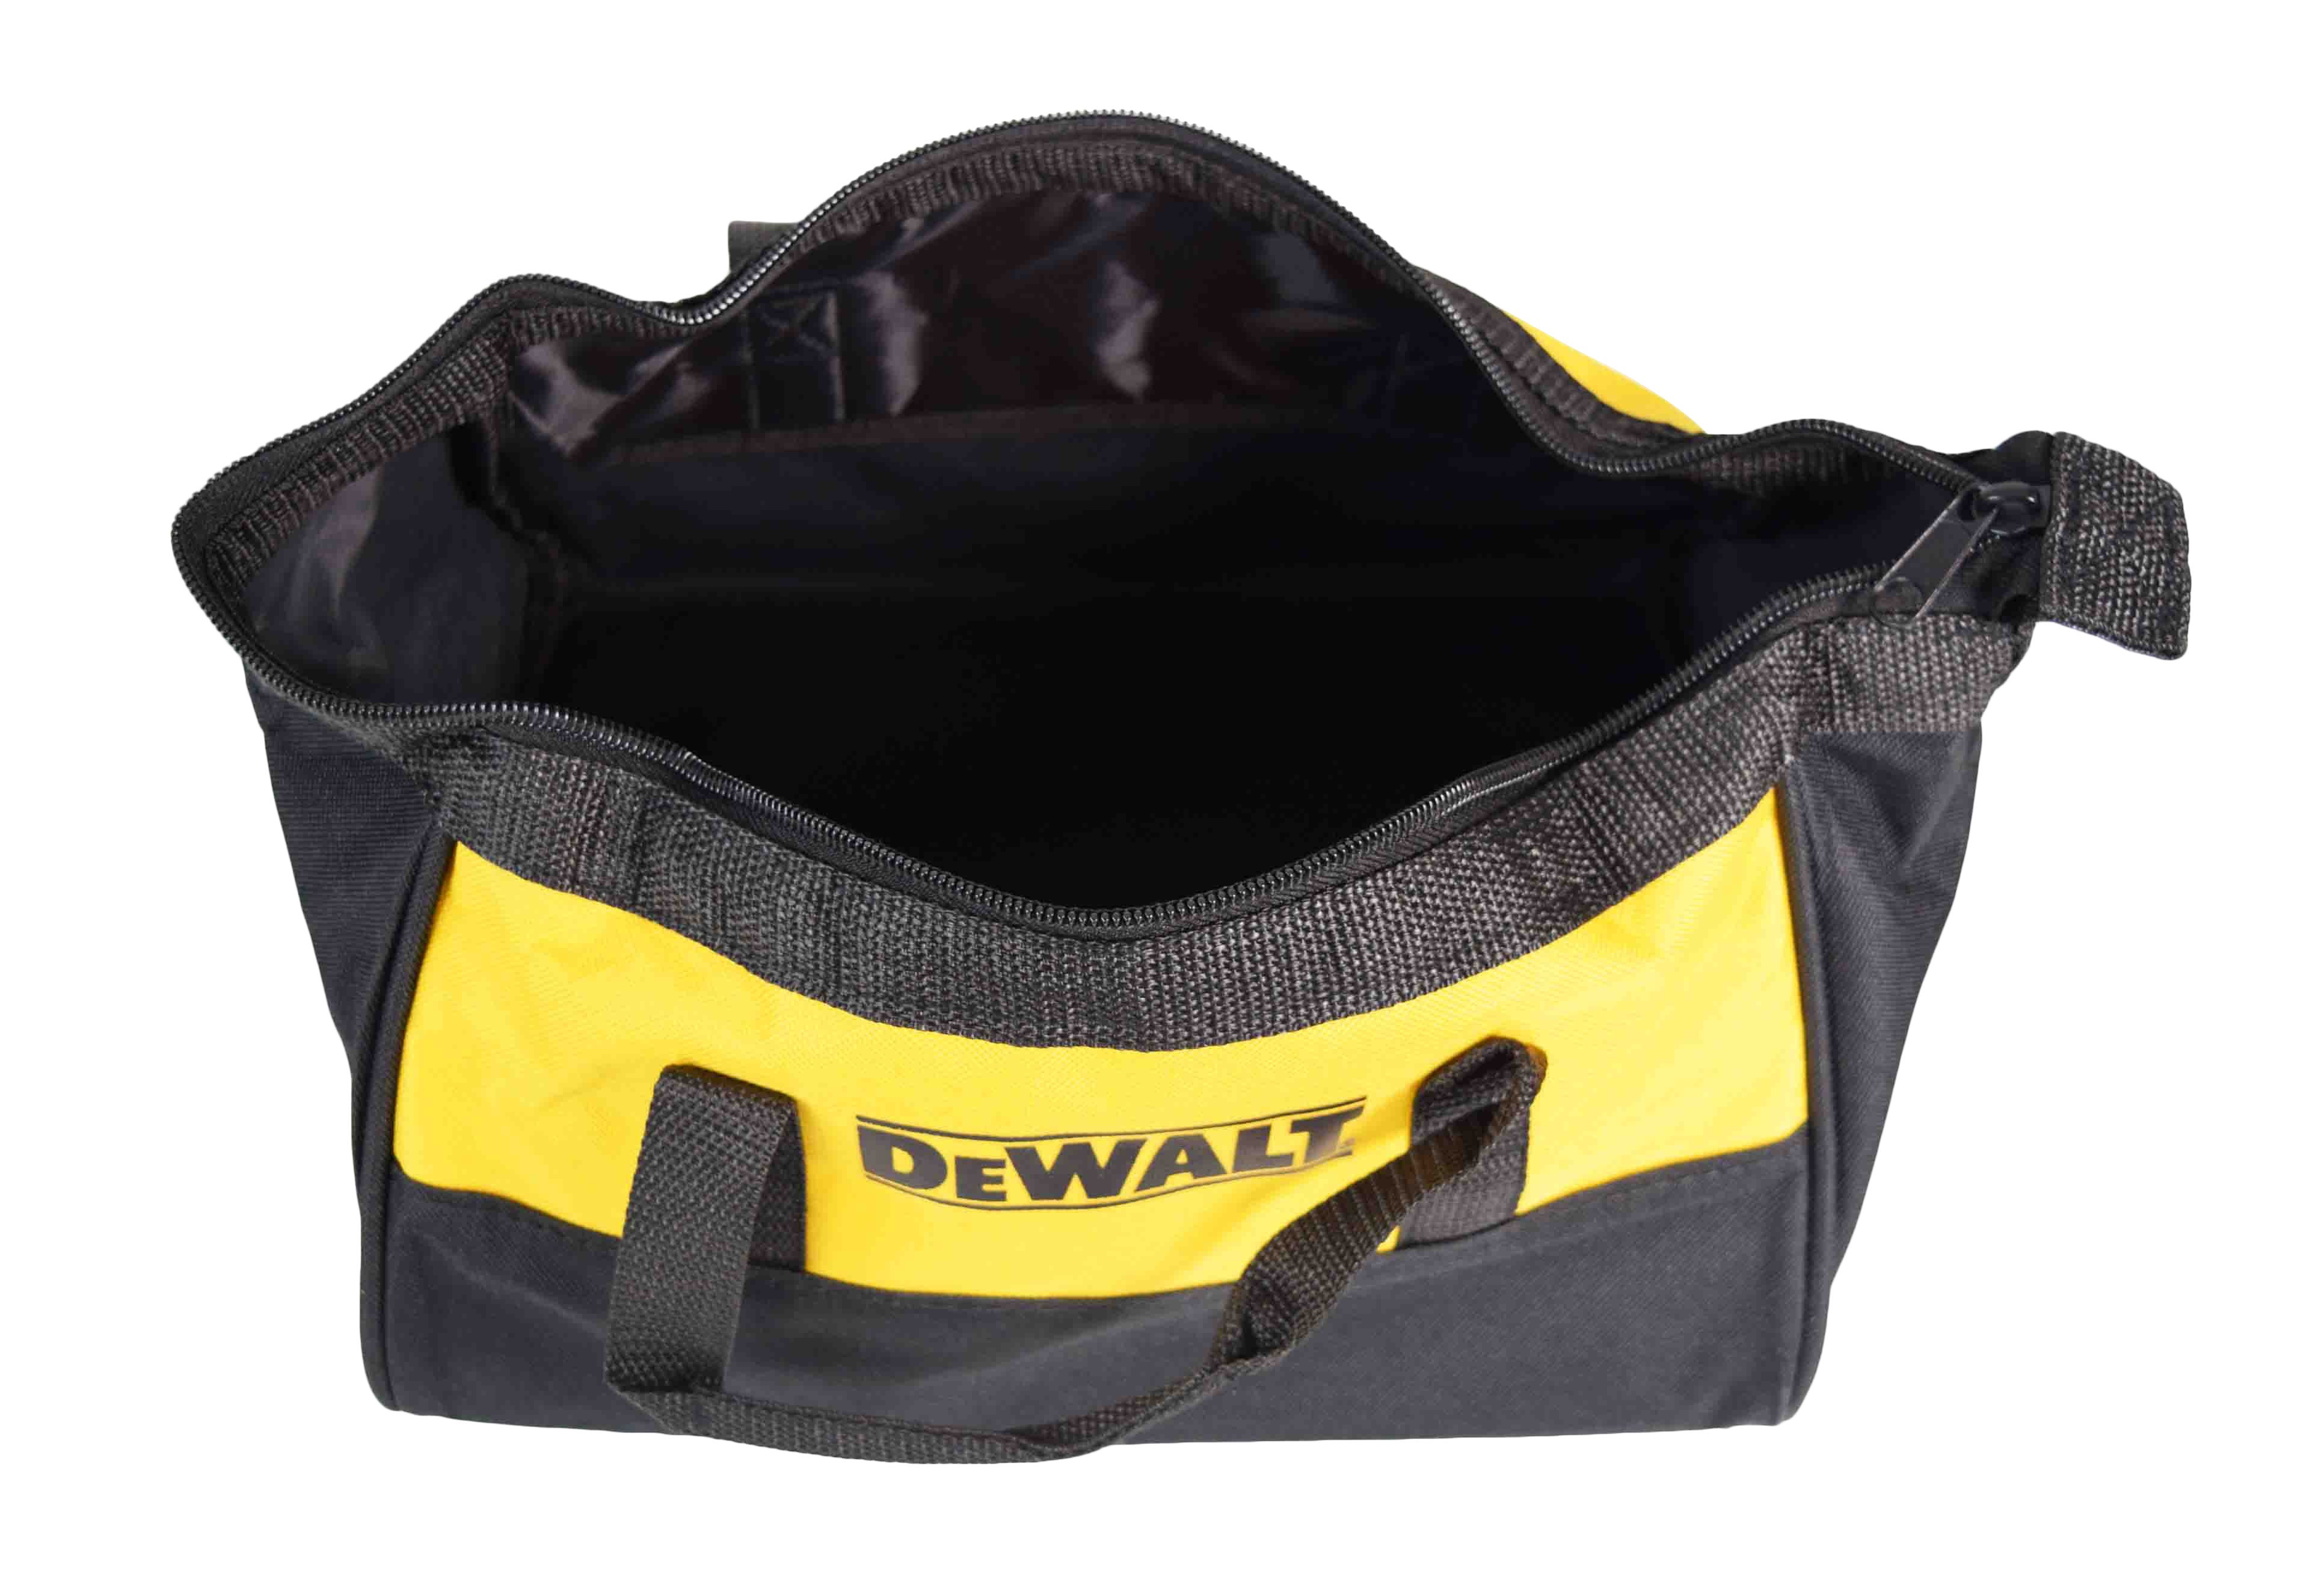 Dewalt Bag15Dewalt 15" Tool Bag Nylon With Zipper Closure